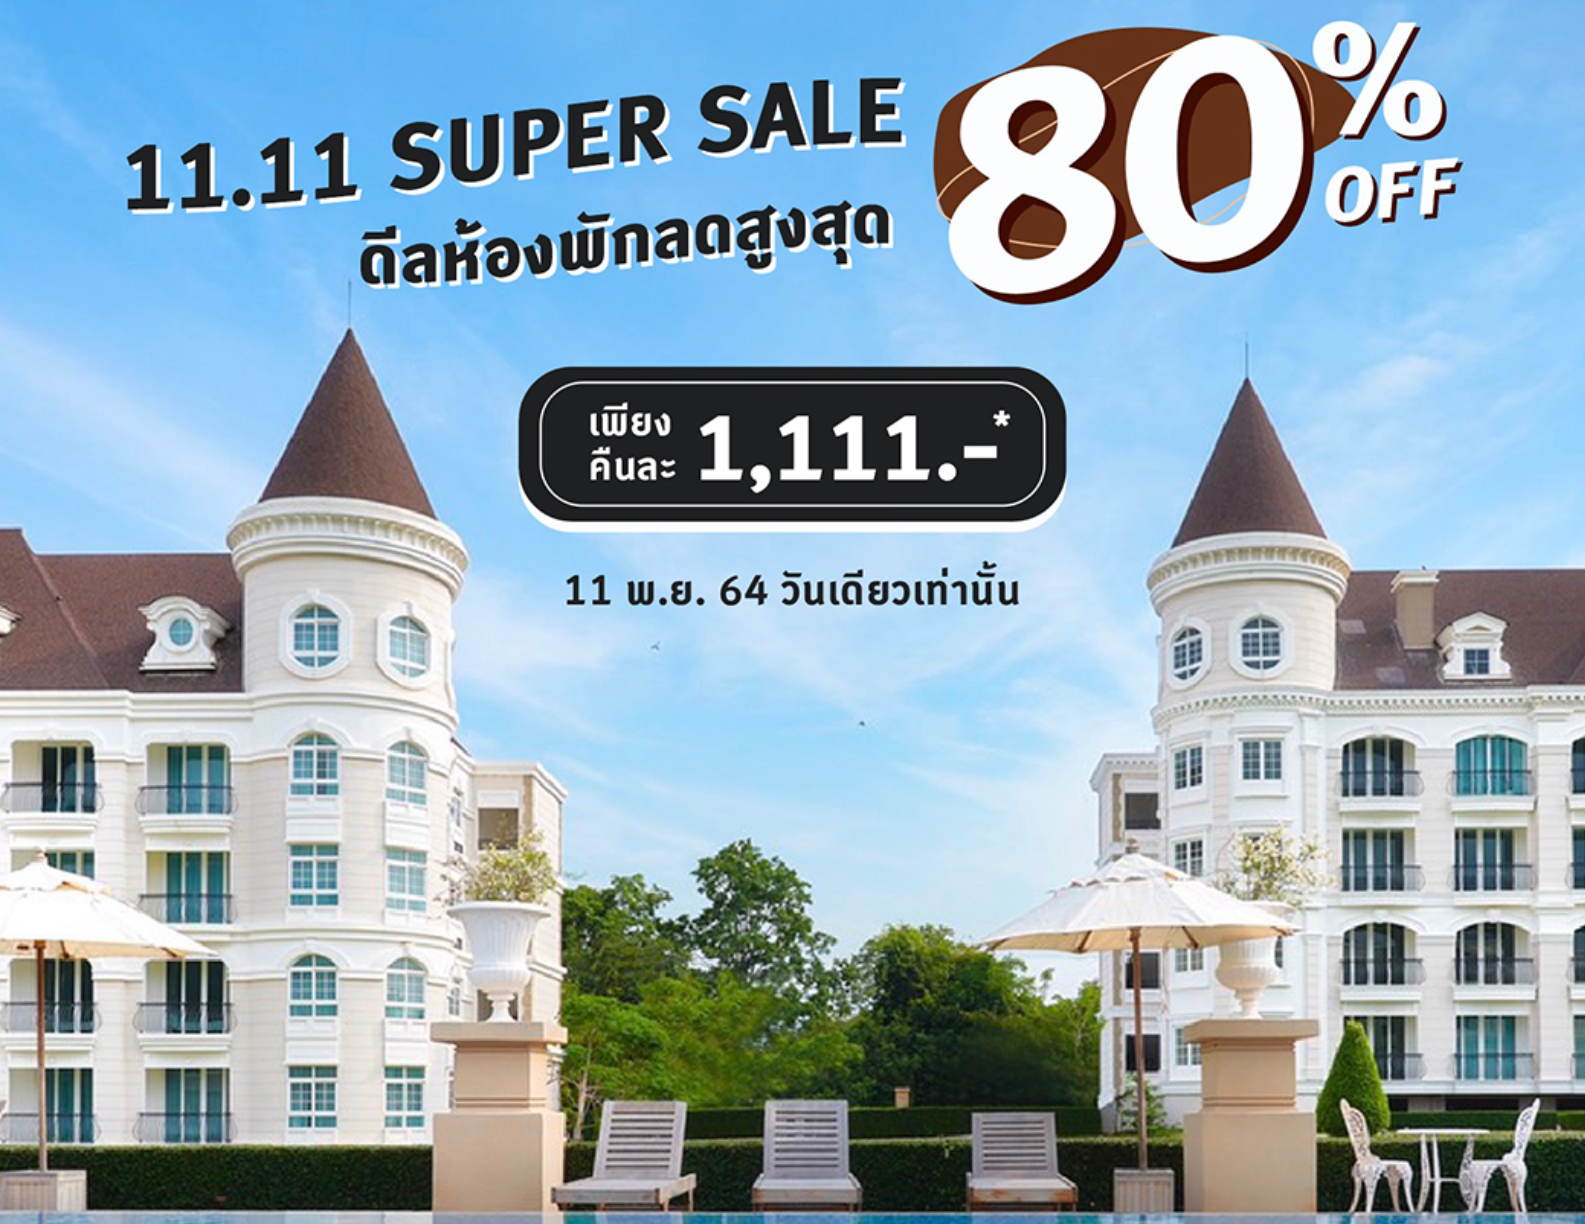 11.11 Super sale กว่า 80%! | โรงแรมและรีสอร์ท ชาโต เดอ เขาใหญ่